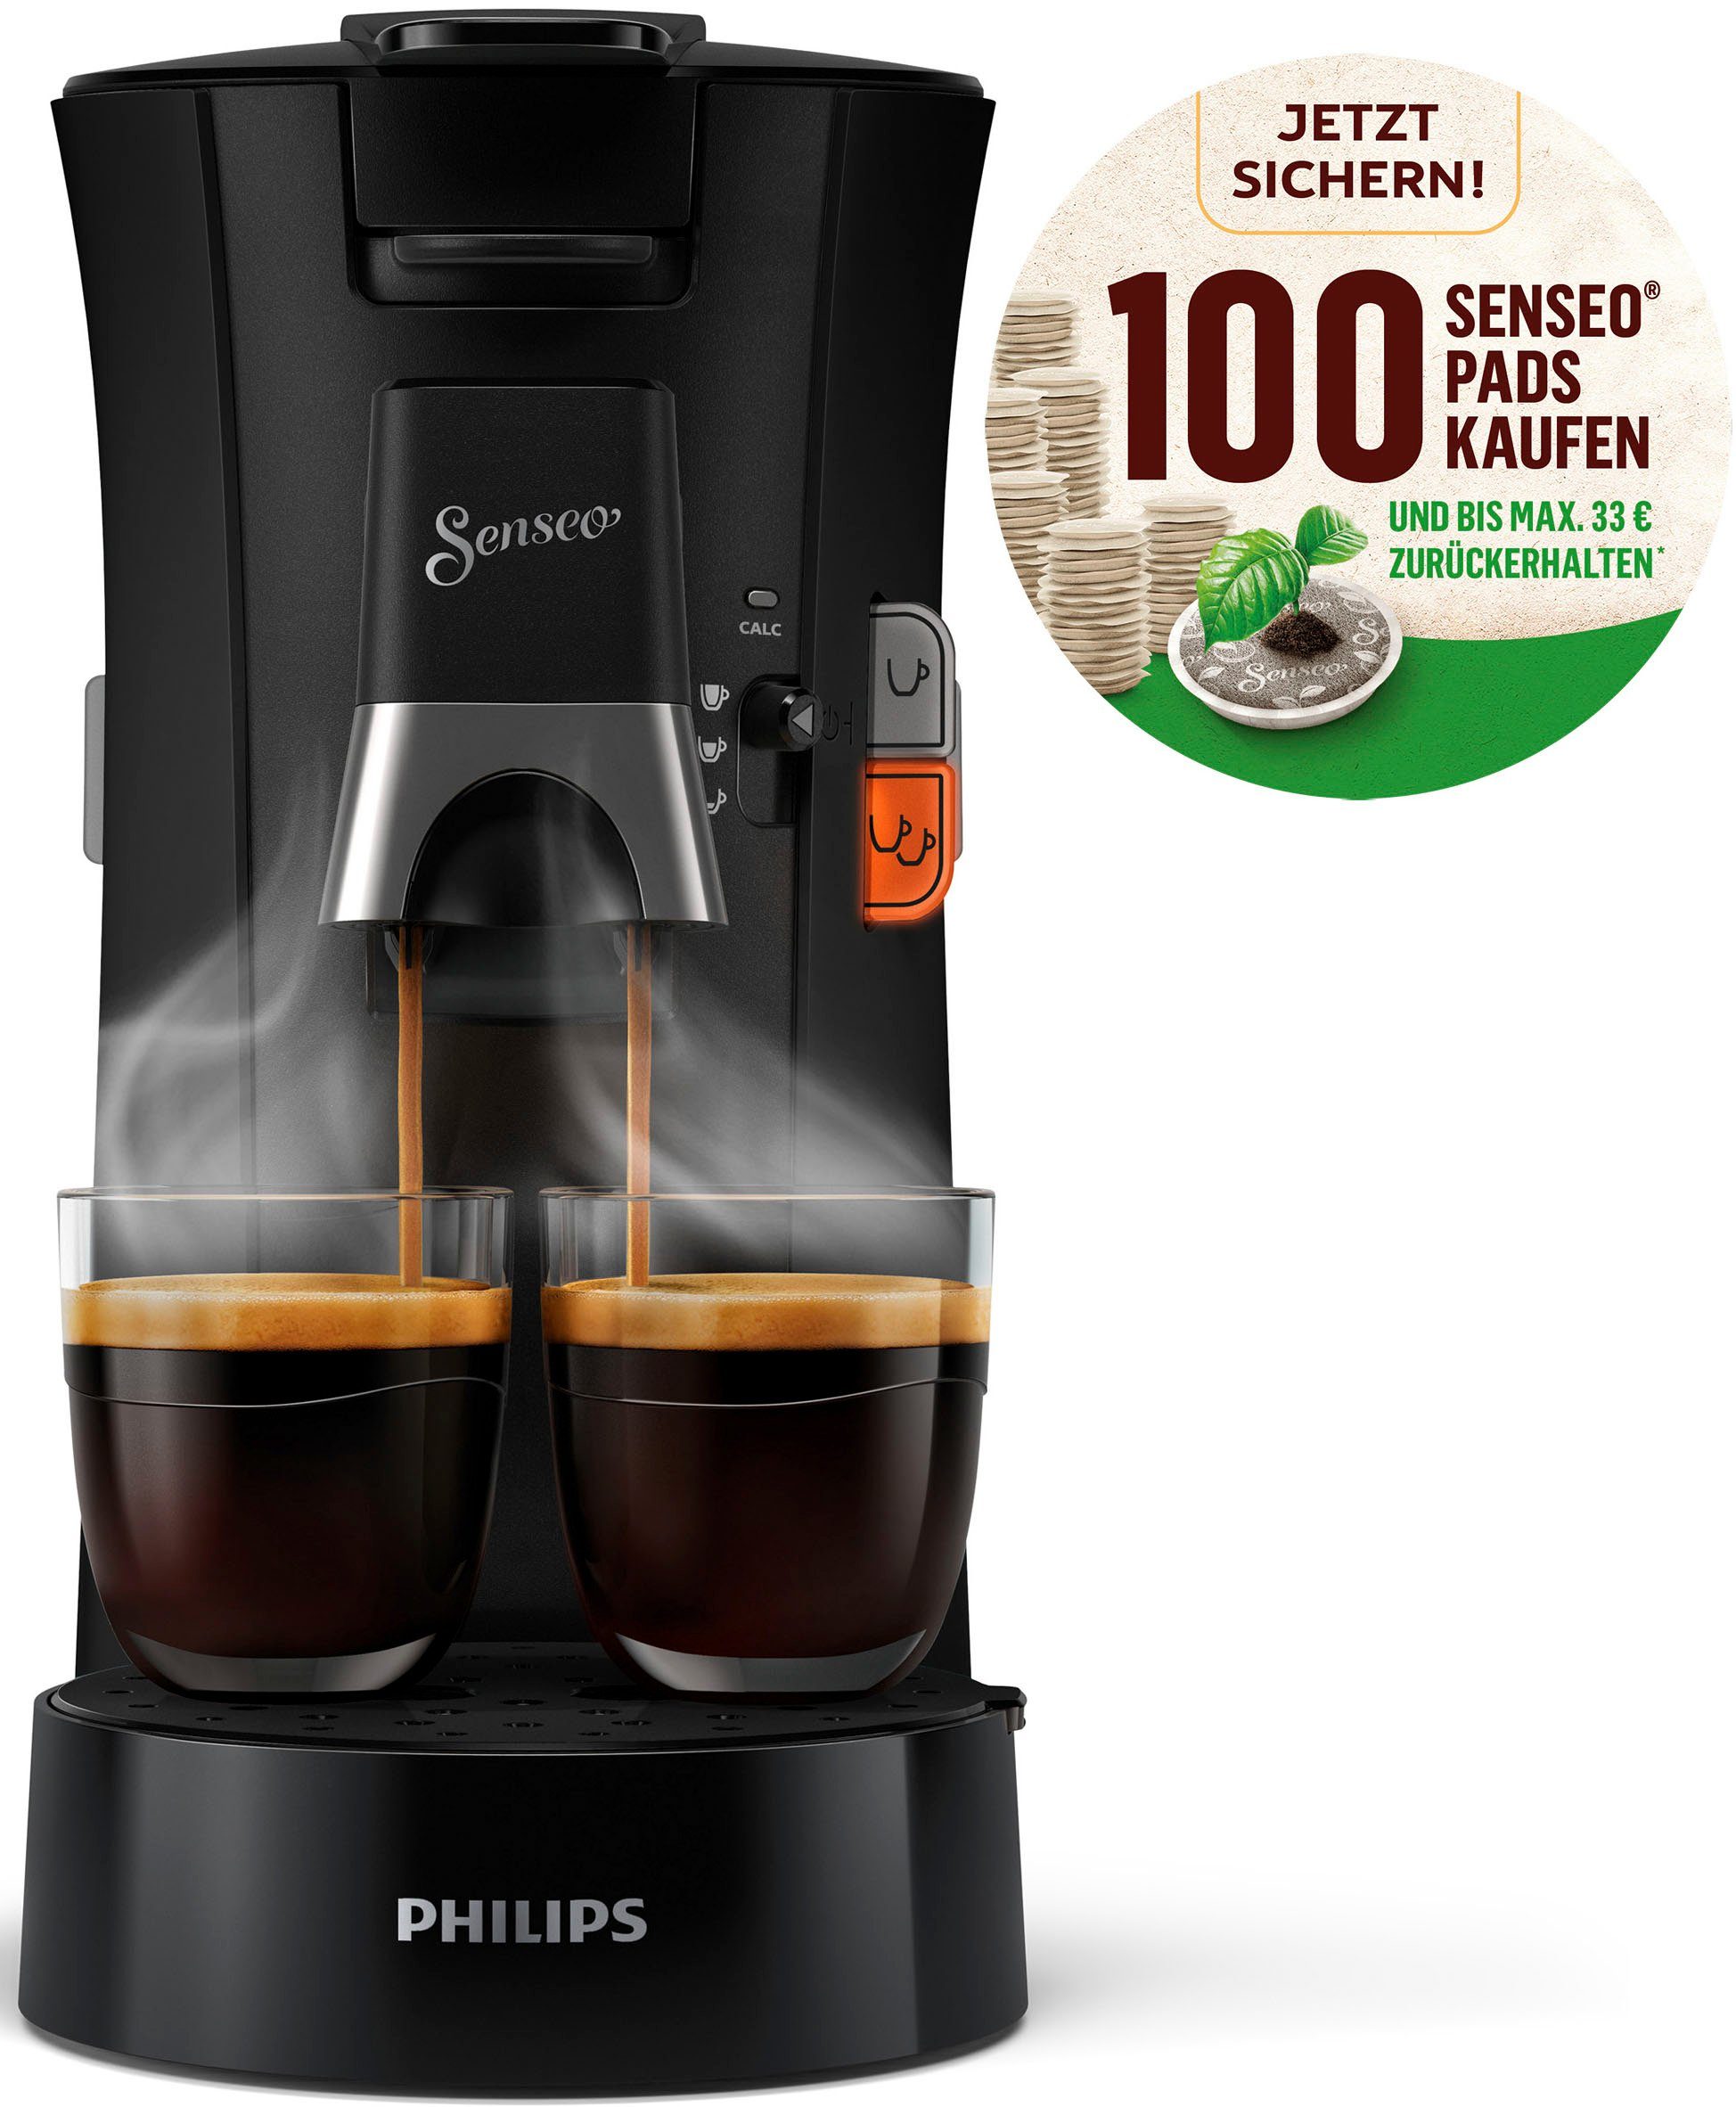 Senseo Koffiepadautomaat Select CSA230-69, 100 senseo pads kopen en max. € 33,00 terug krijgen